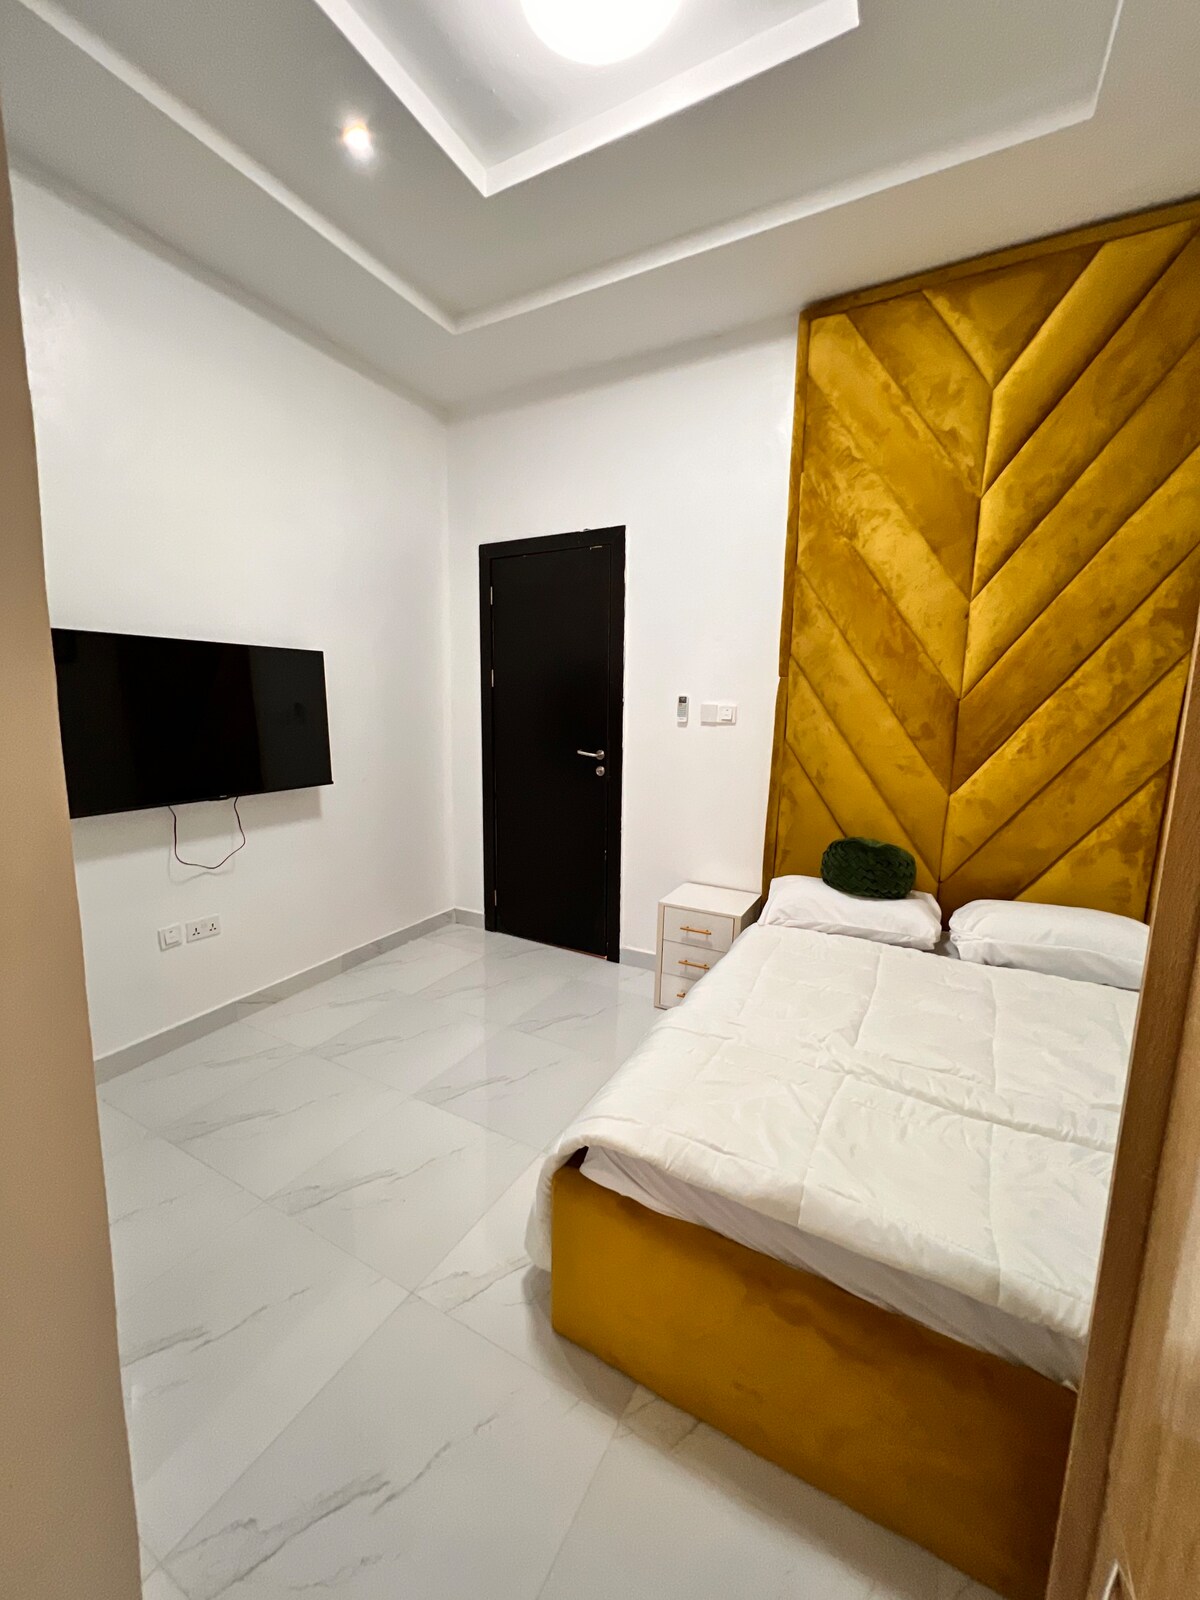 2 bedrooms luxury aprt duplex